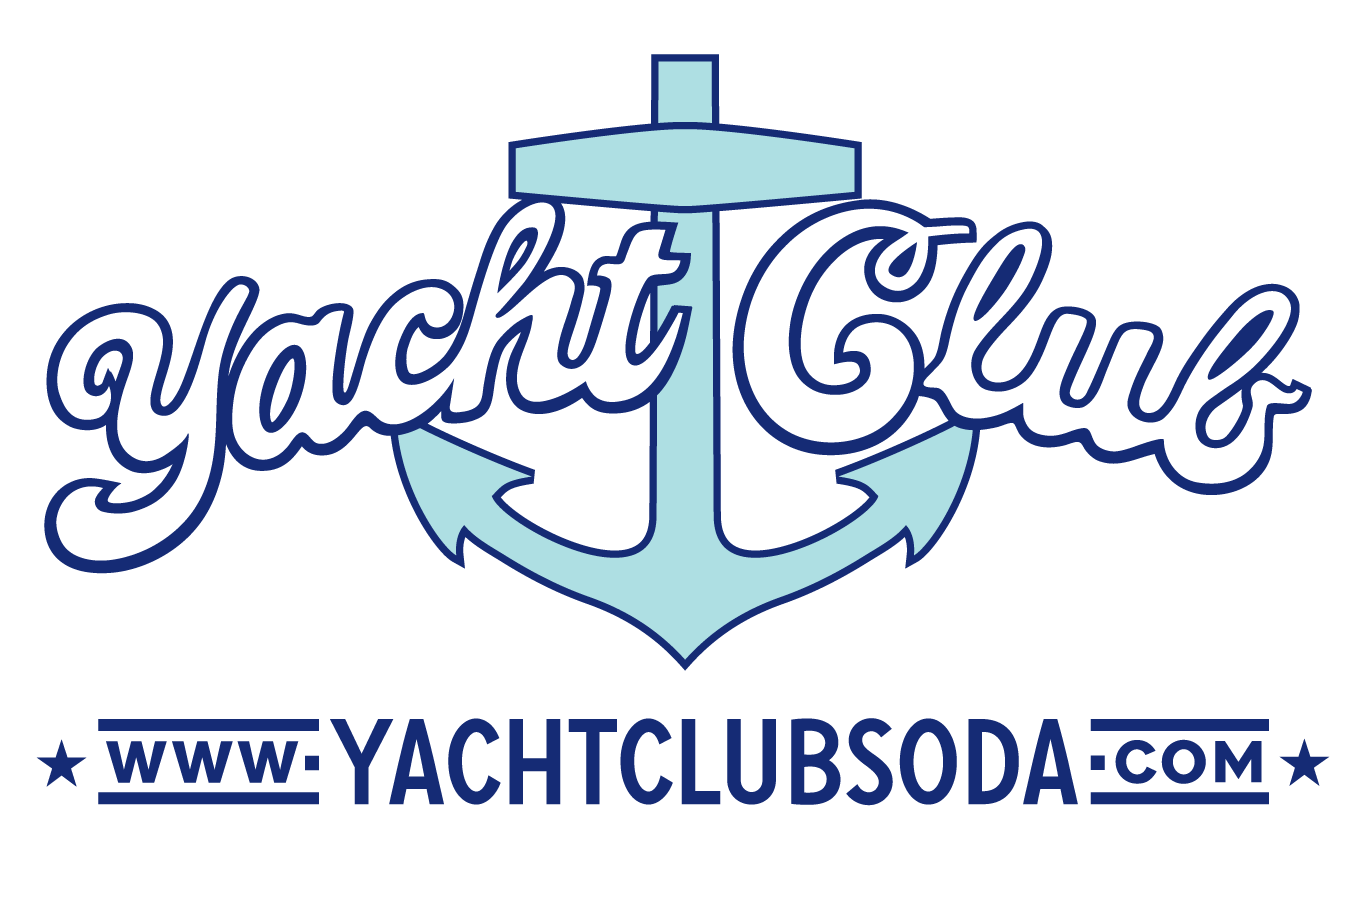 Yacht Club Bottling Works